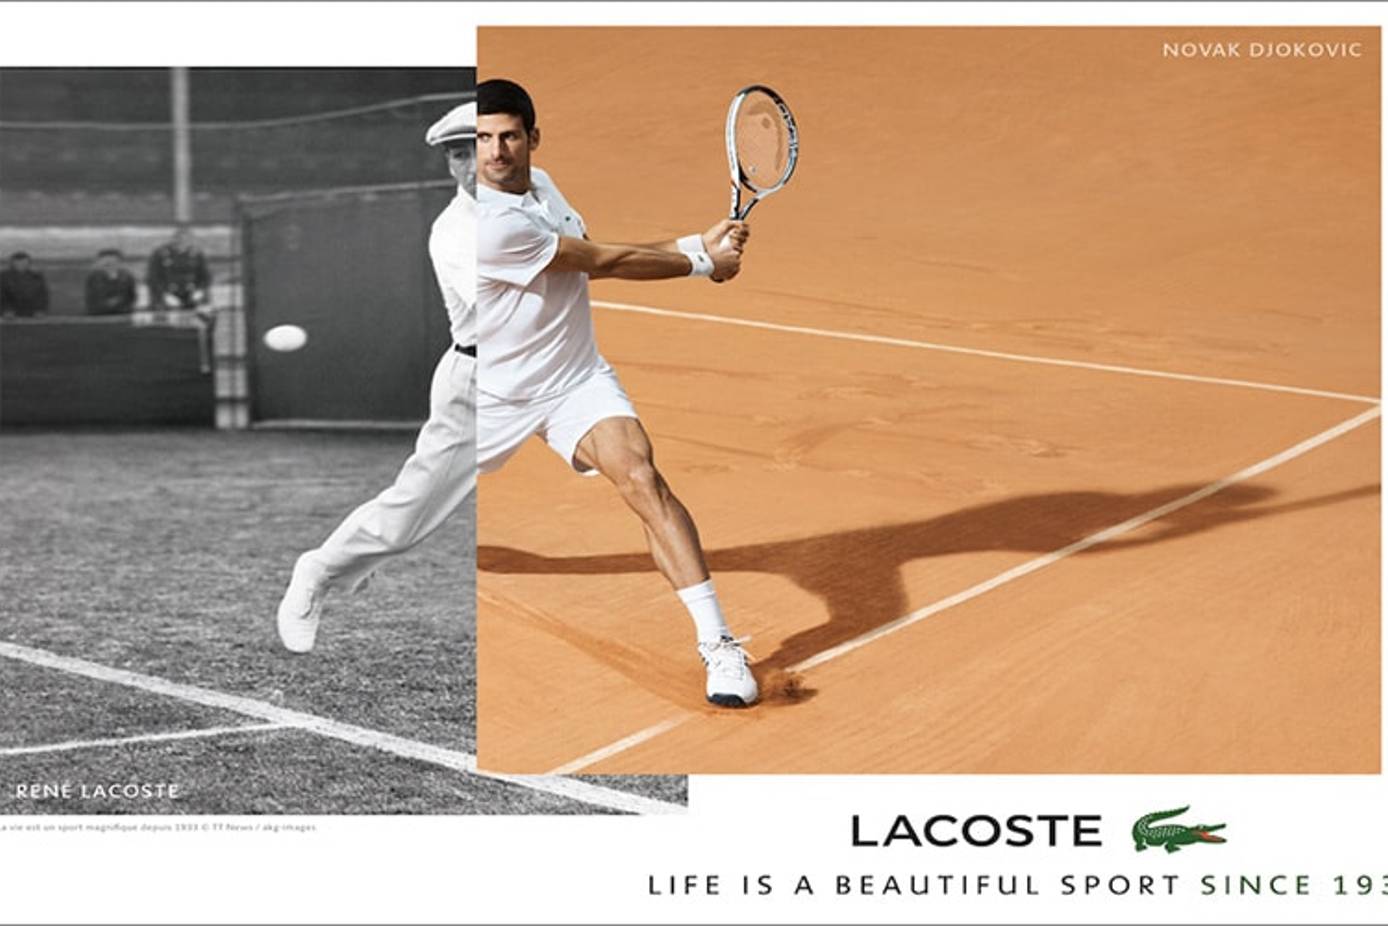 Novak Djokovic joins Lacoste's of